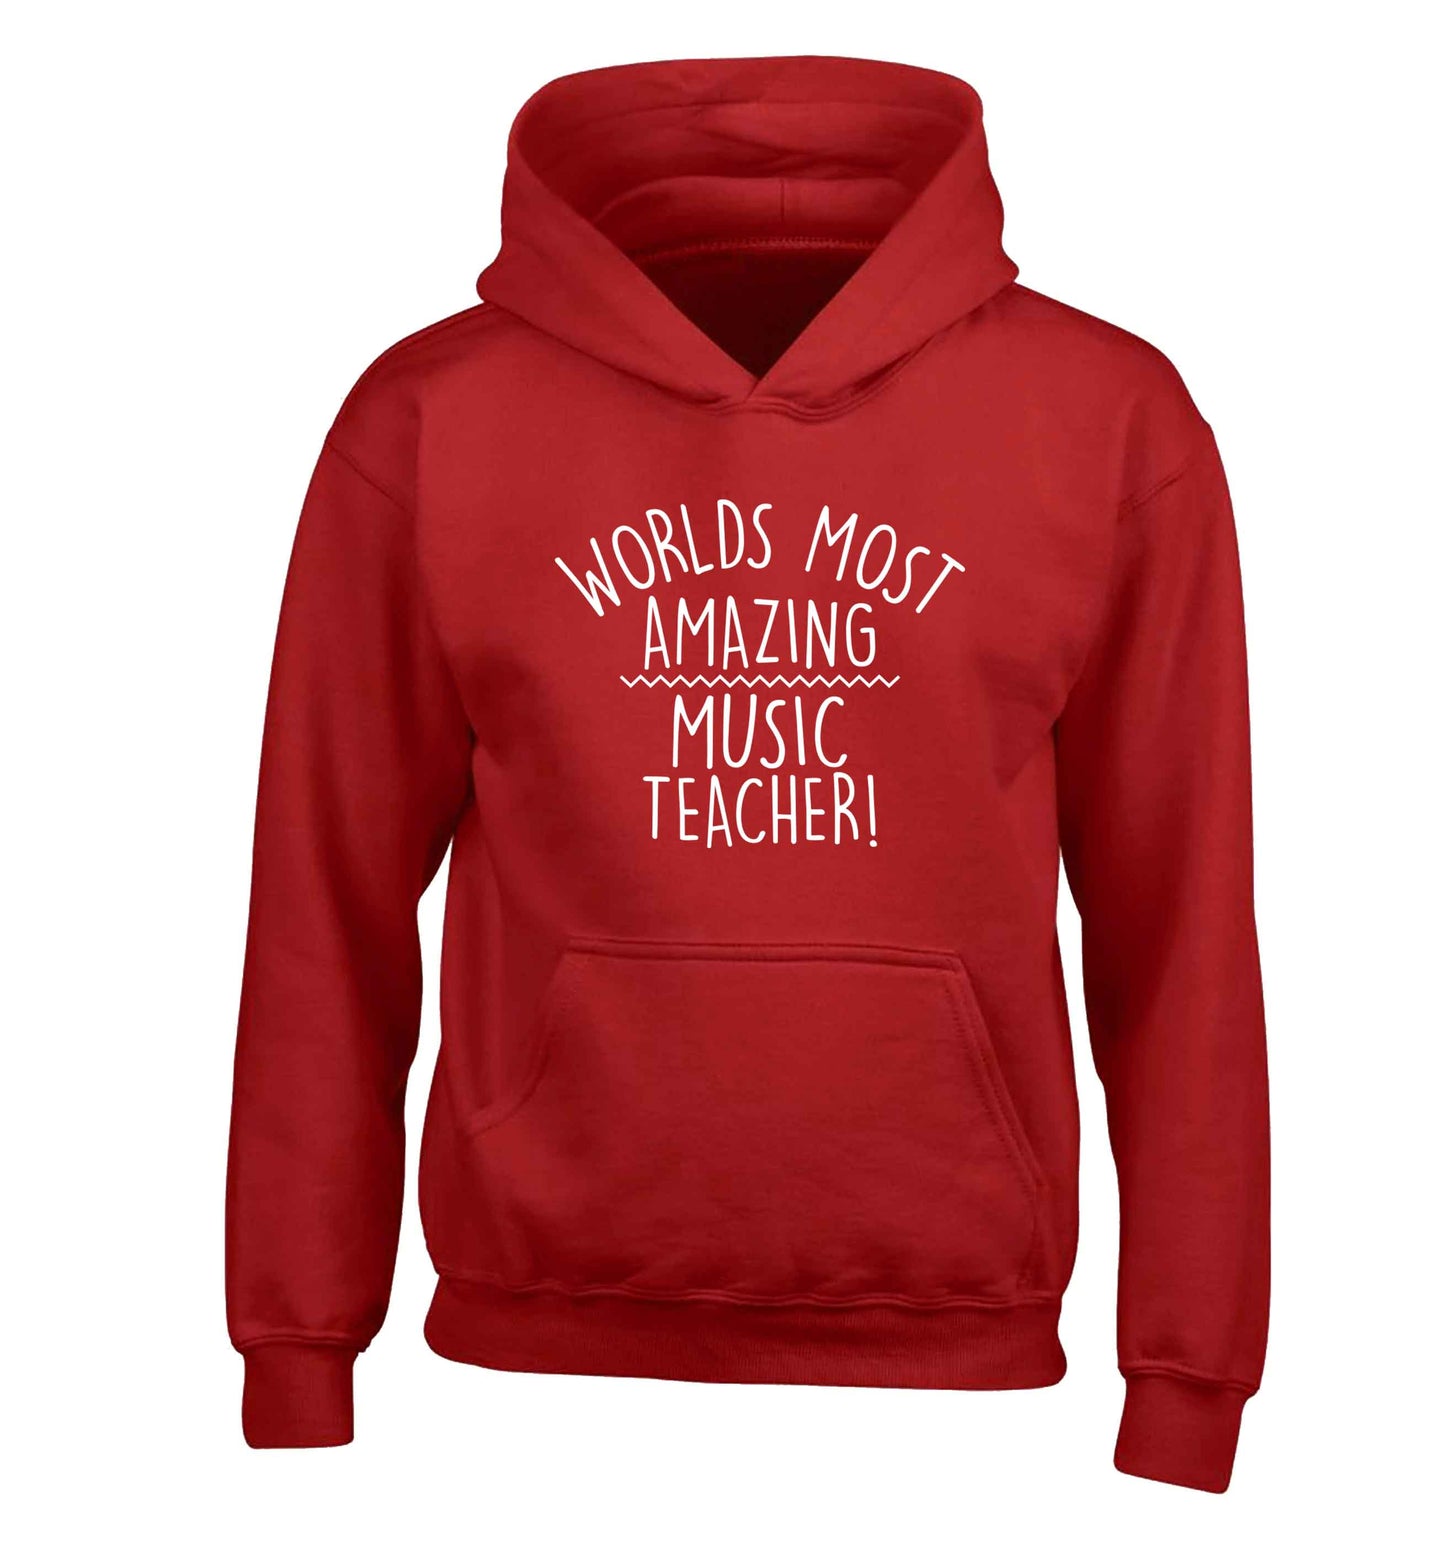 Worlds most amazing music teacher children's red hoodie 12-13 Years